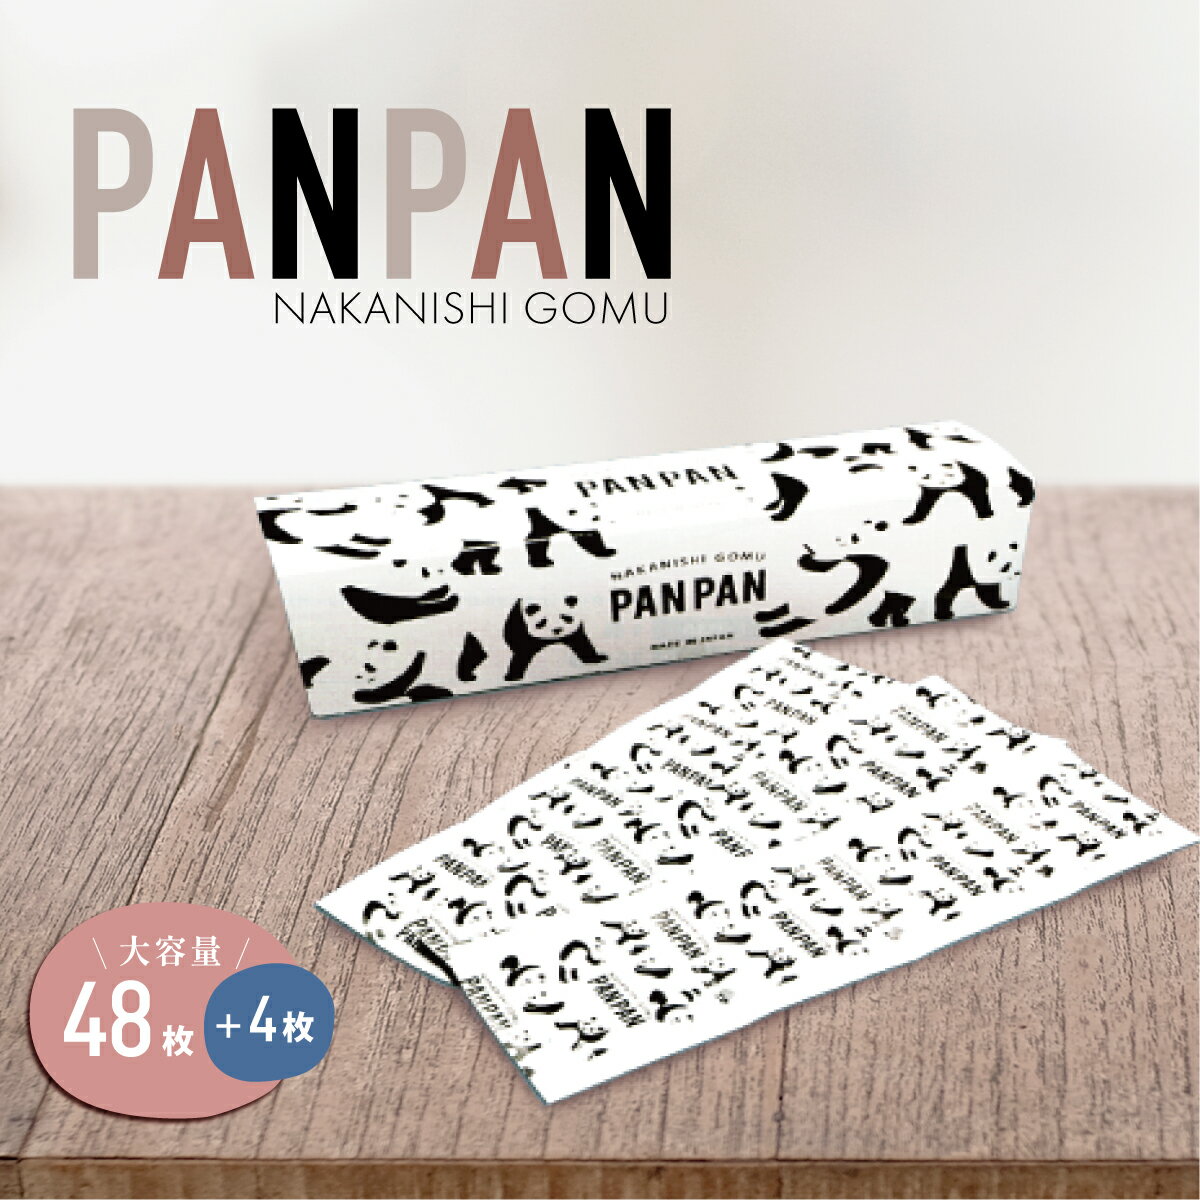 PANPAN 48+4個入 パンパン コンドーム 大容量 おしゃれ 両面ゼリー加工 避妊具 避妊用品 スキン 0.03m 中西ゴム工業…